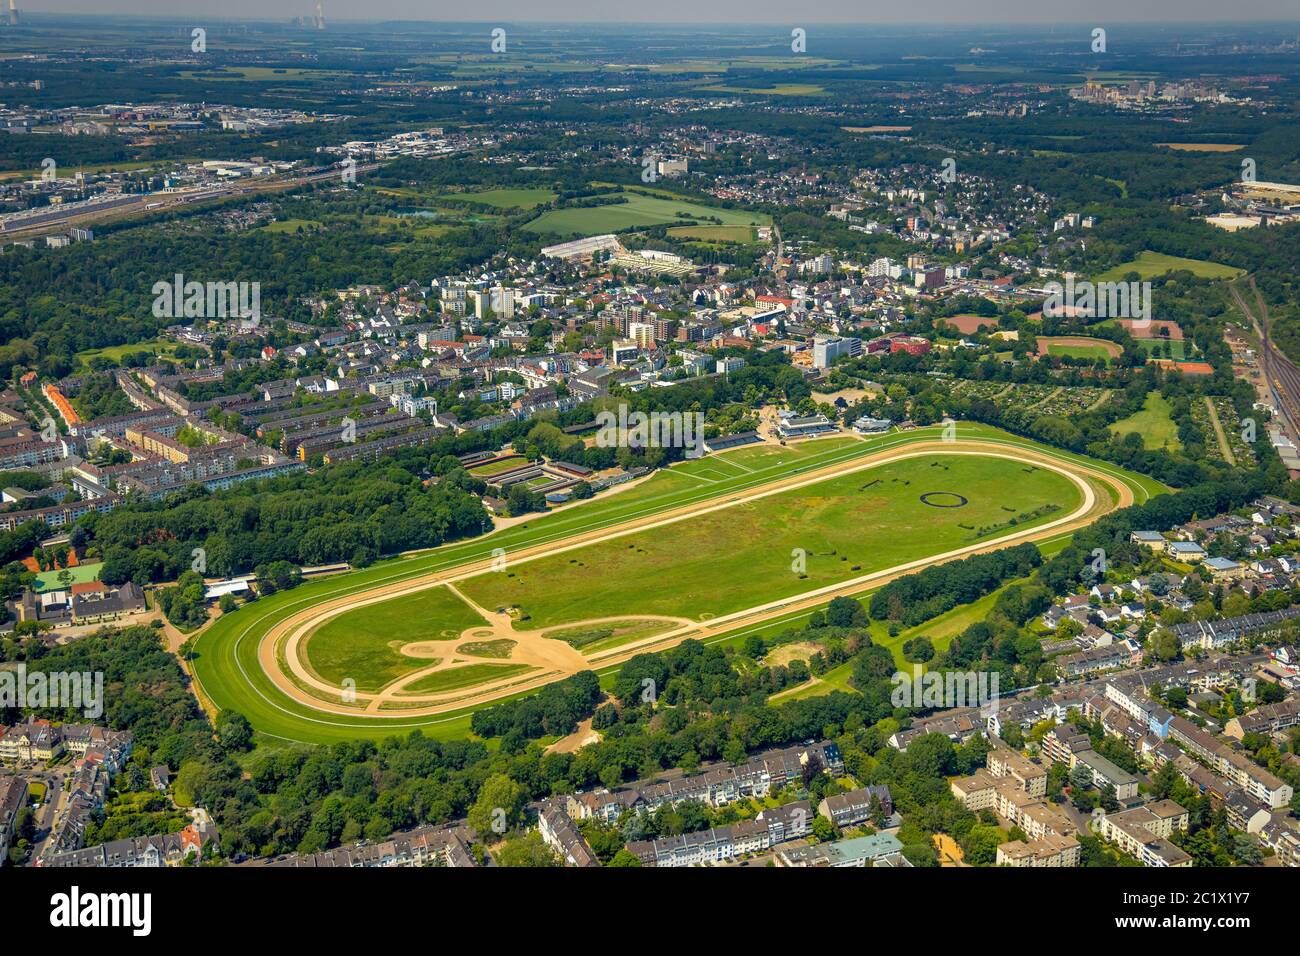 racecourse Cologne, Galopprennbahn Koeln-Weidenpesch, 05.06.2020, aerial view, Germany, North Rhine-Westphalia, Rhineland, Cologne Stock Photo